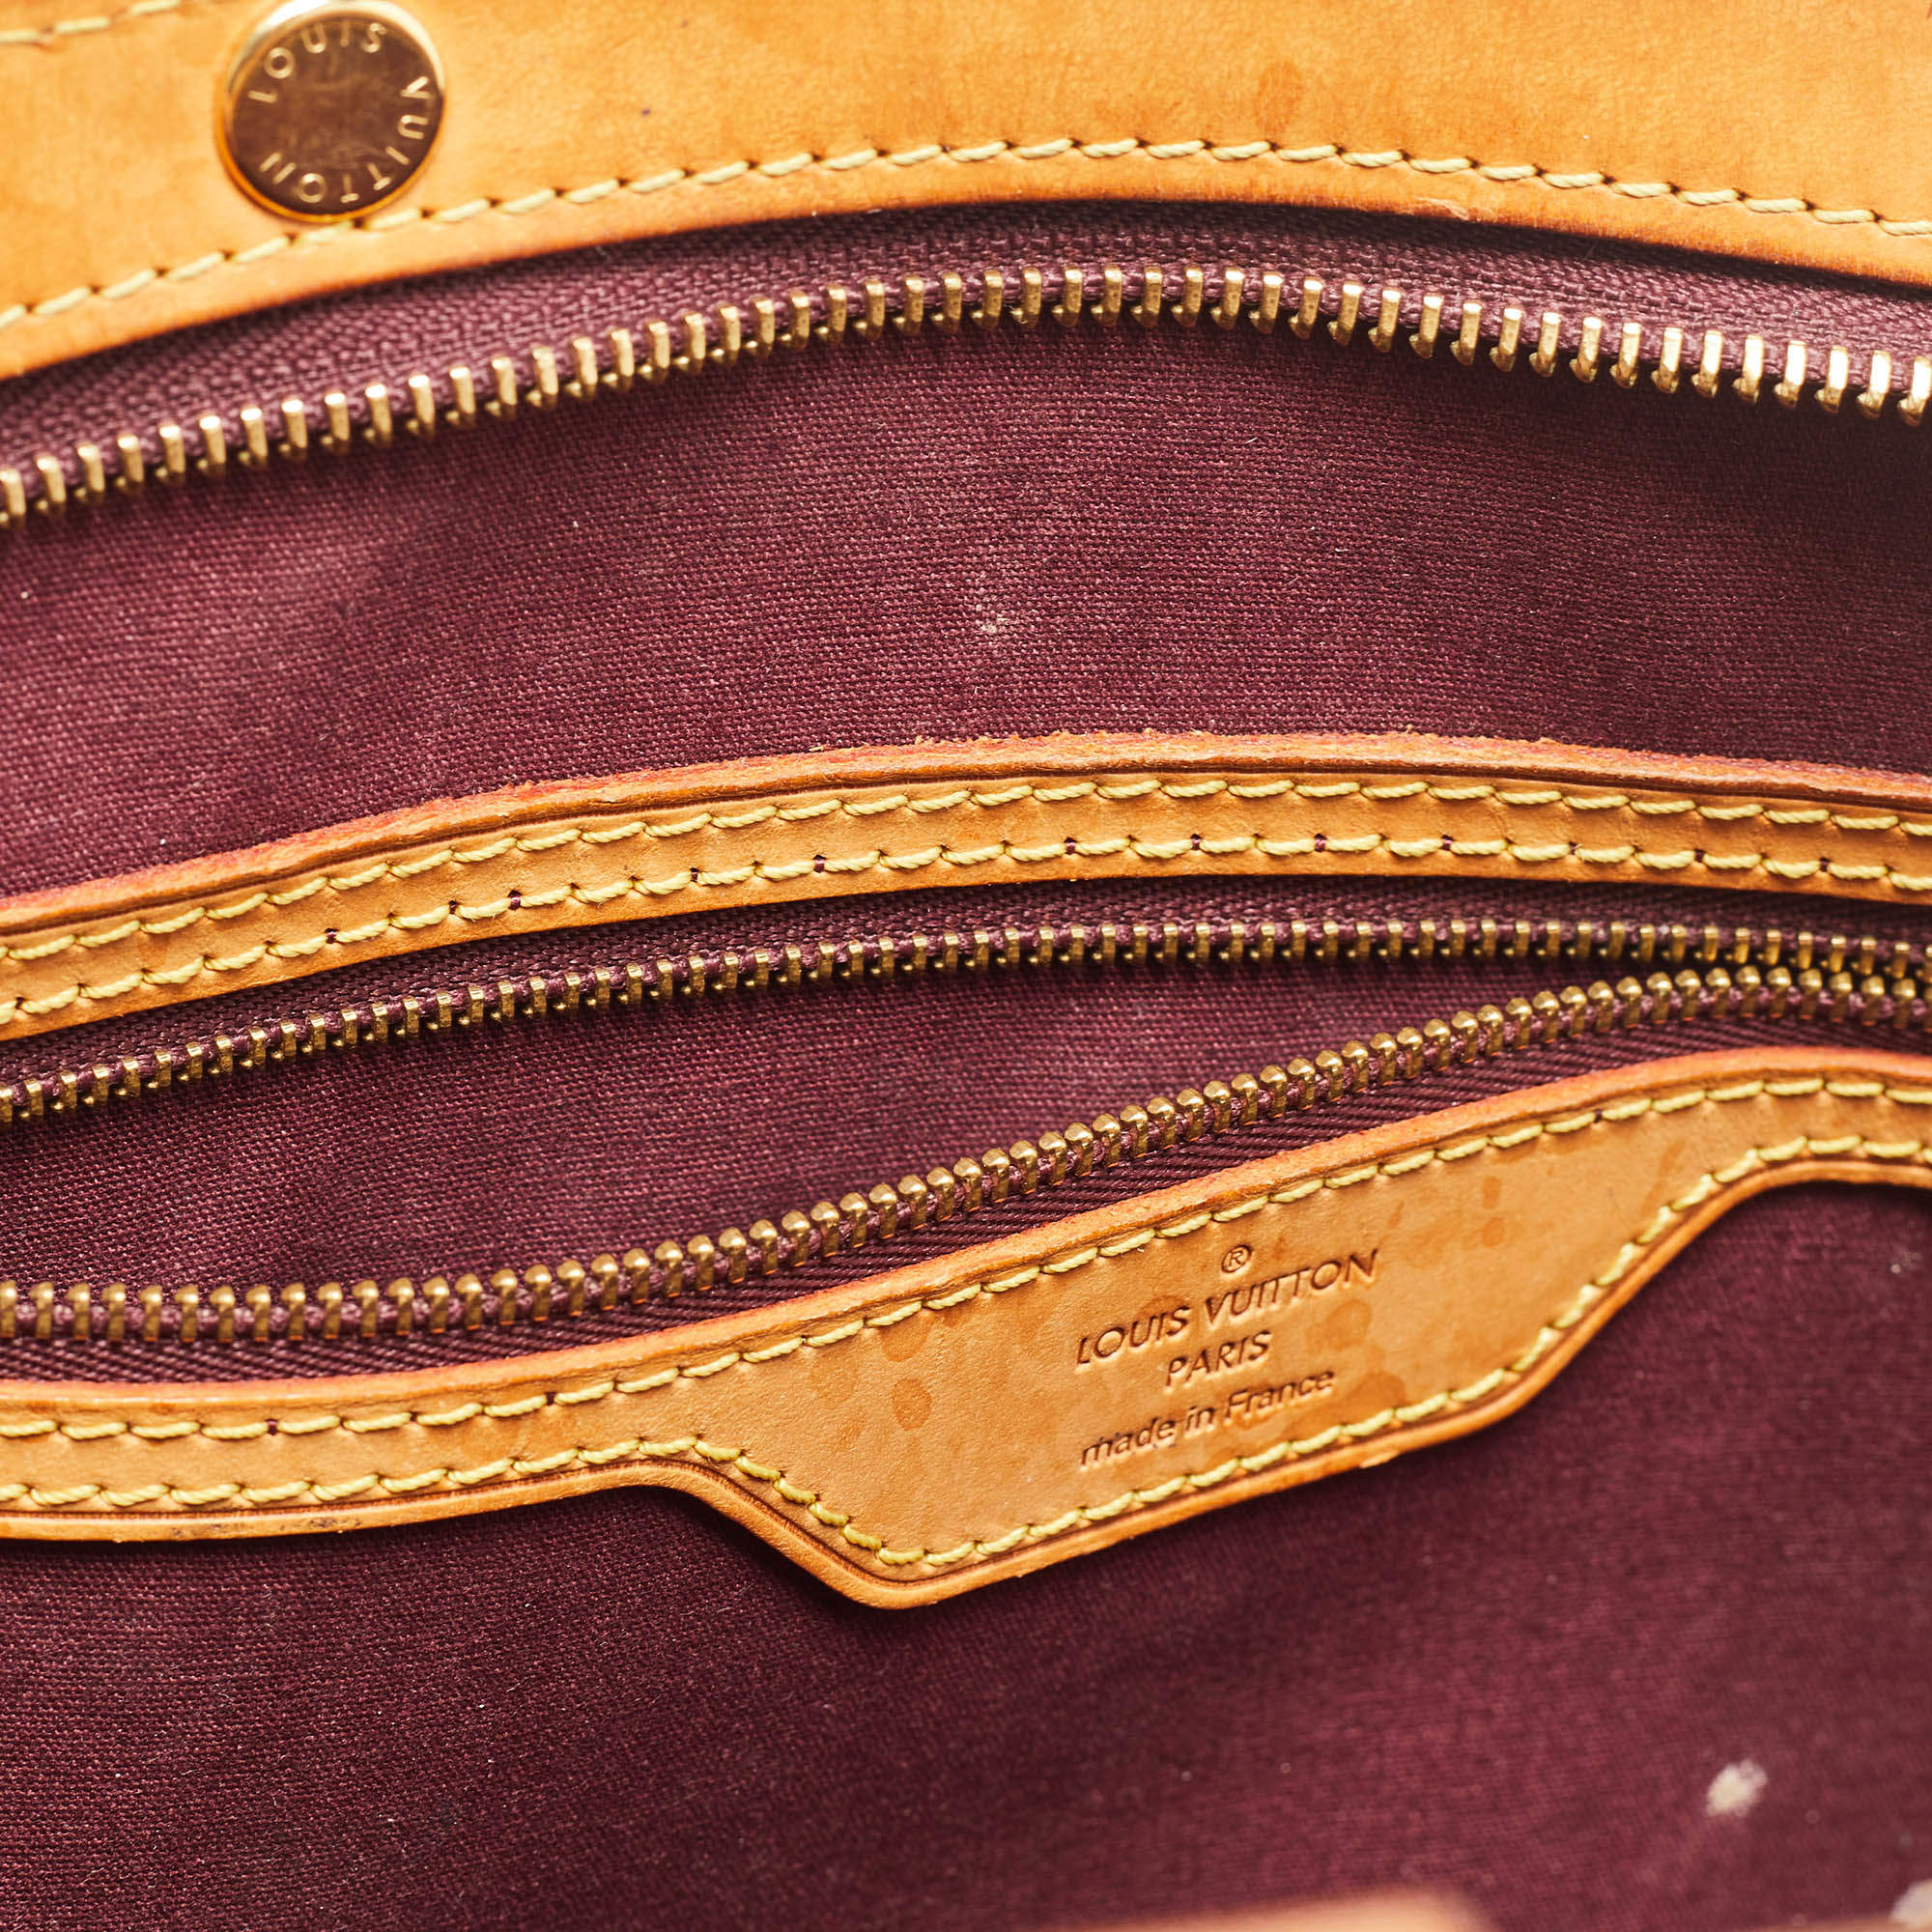 Louis Vuitton Yellow Monogram Vernis Leather Brea MM Bag., Lot #58288